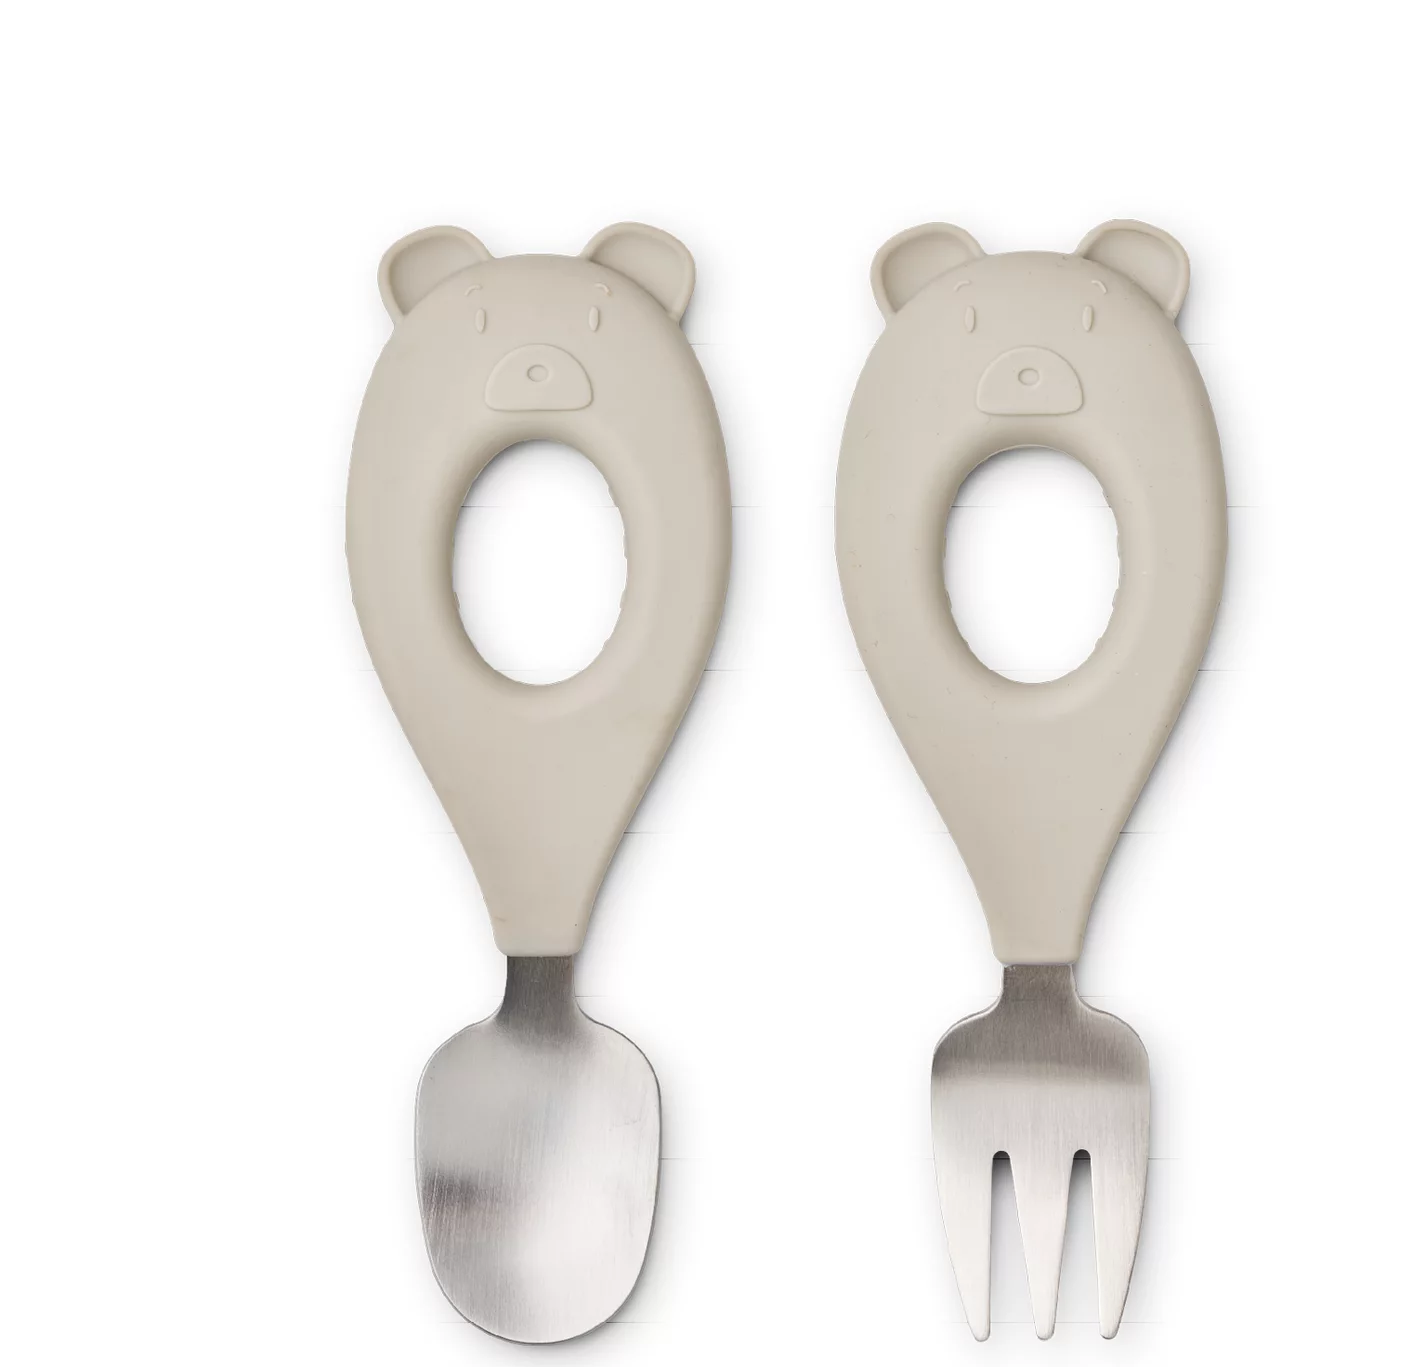 Stanley baby cutlery set Mr bear - Sandy